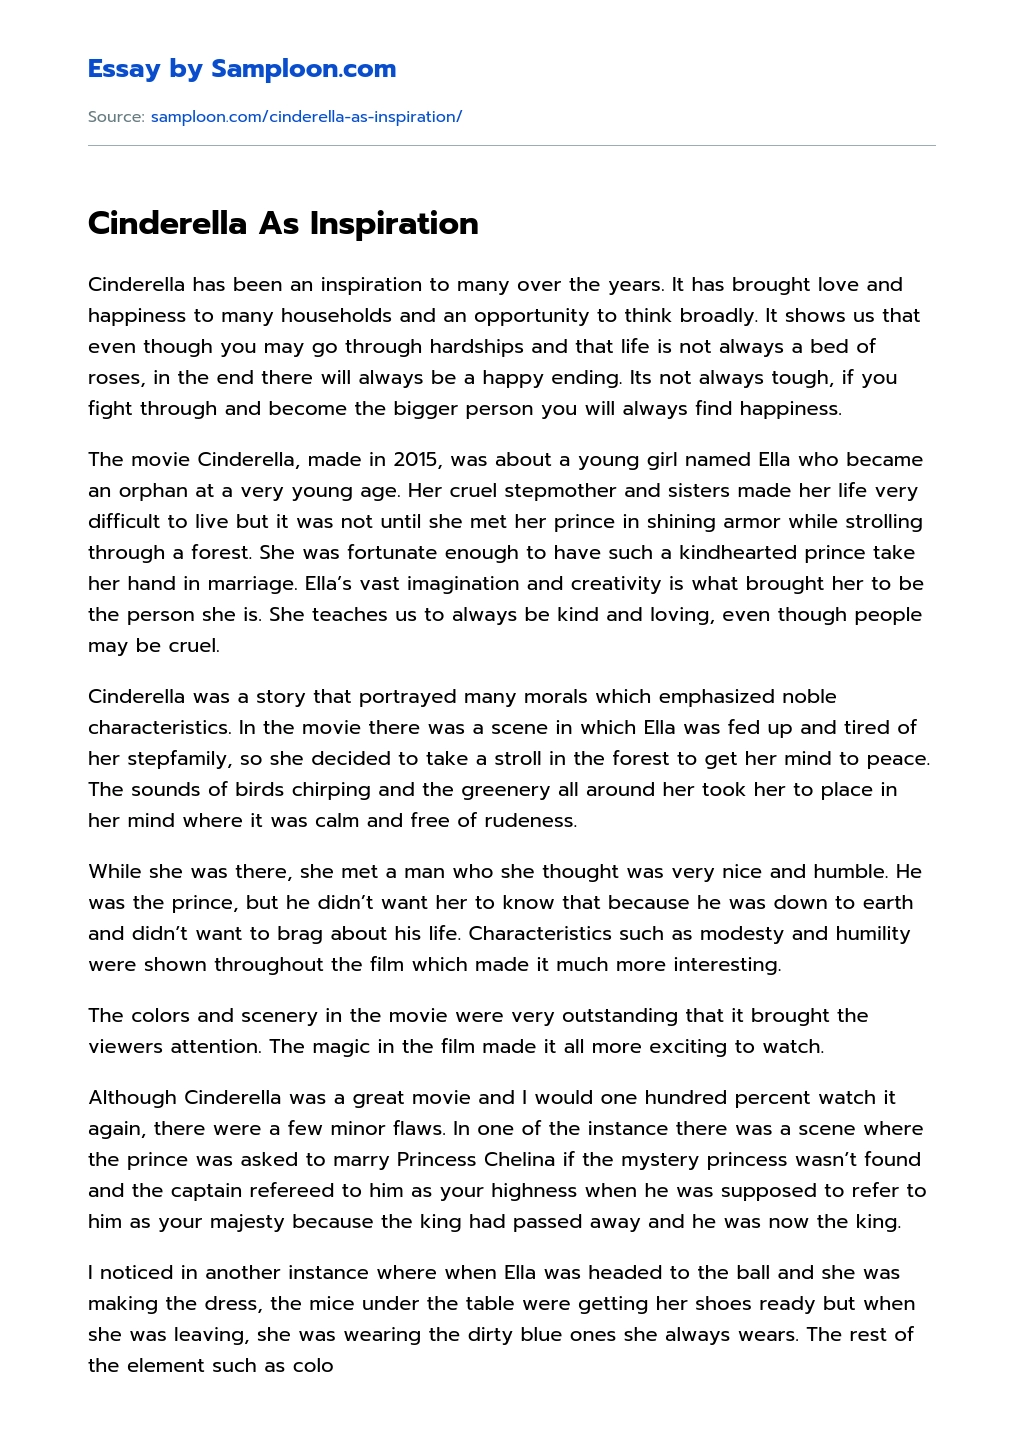 Cinderella As Inspiration essay